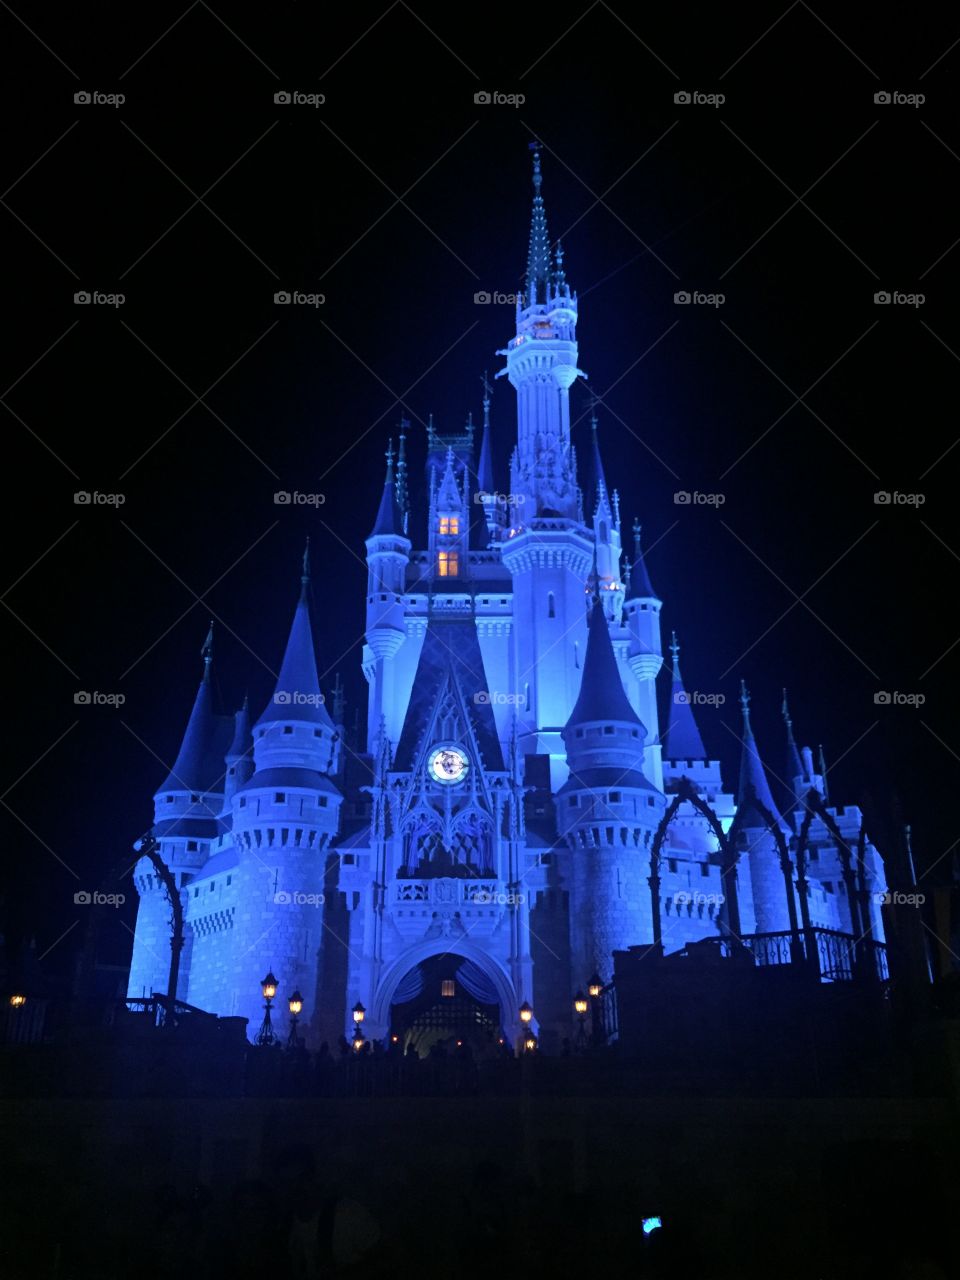 nighttime castle 